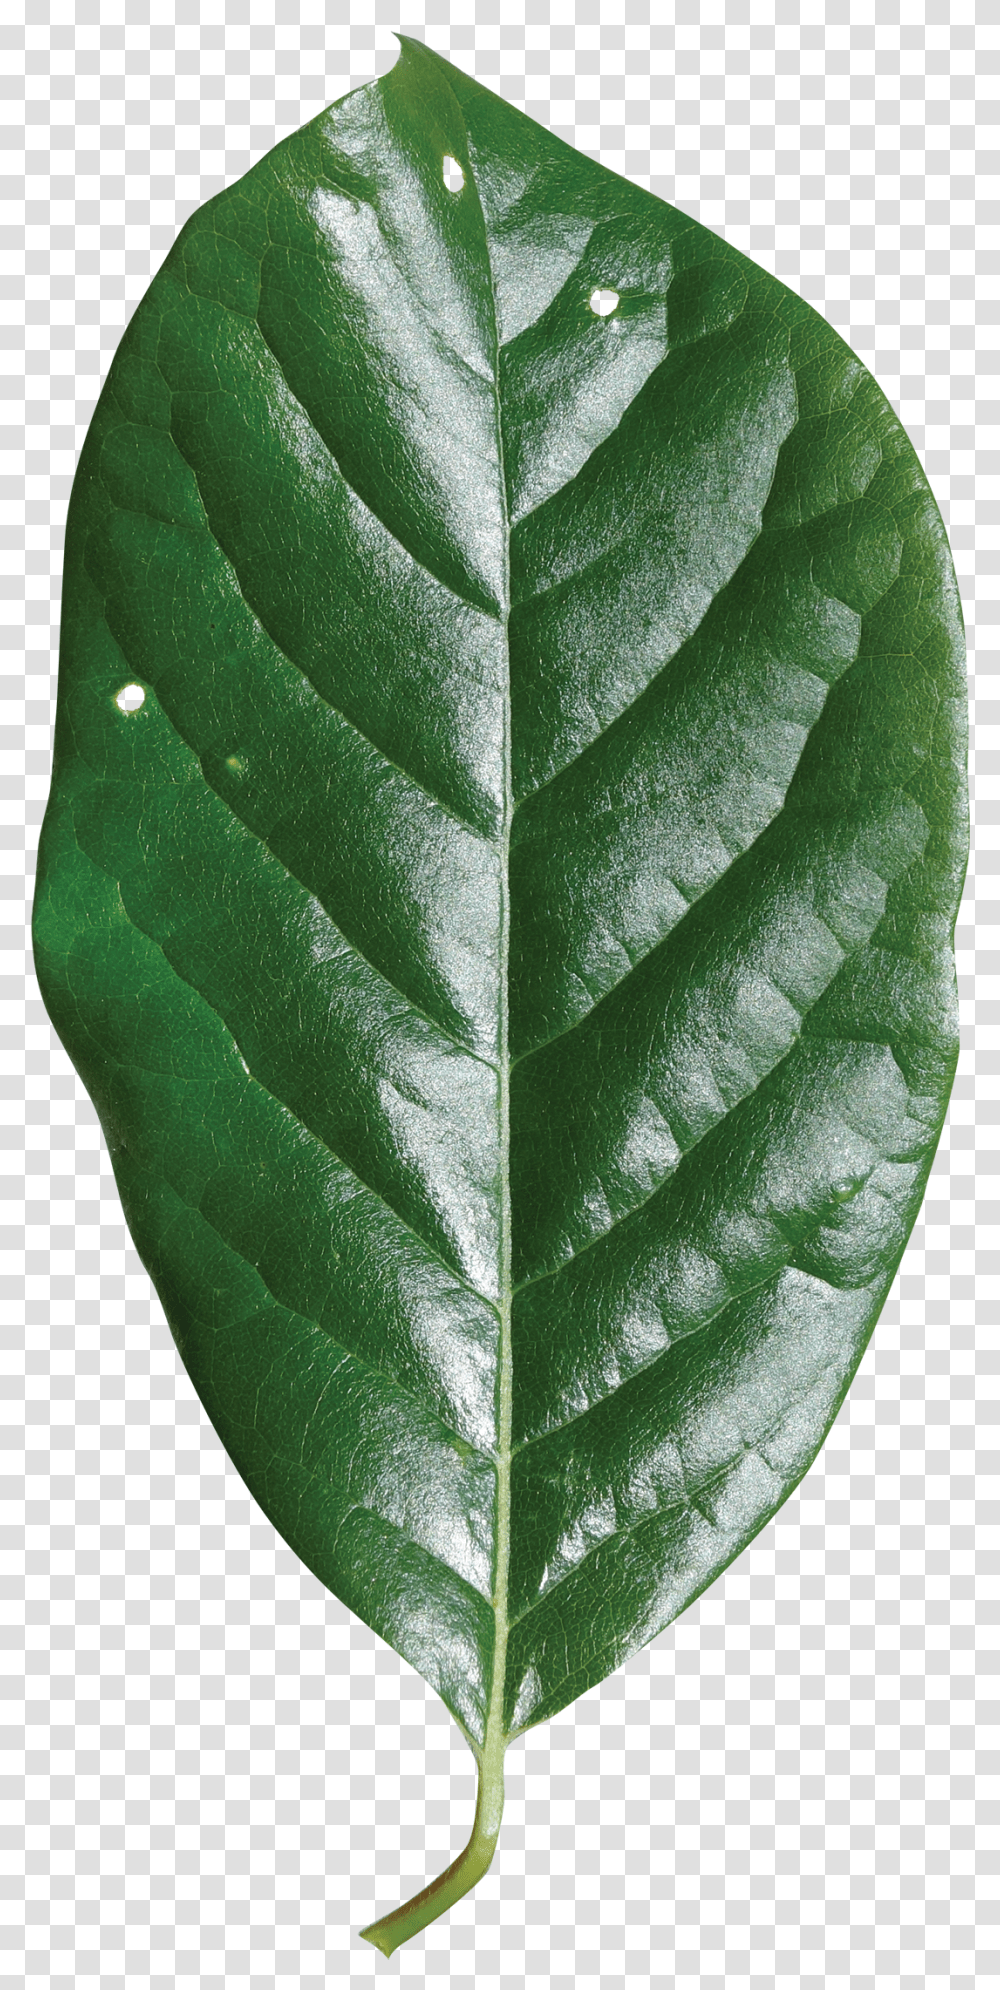 Download Hd Single Green Leaf White Walnut Black Gum Tree Leaves, Plant, Veins, Pineapple, Fruit Transparent Png